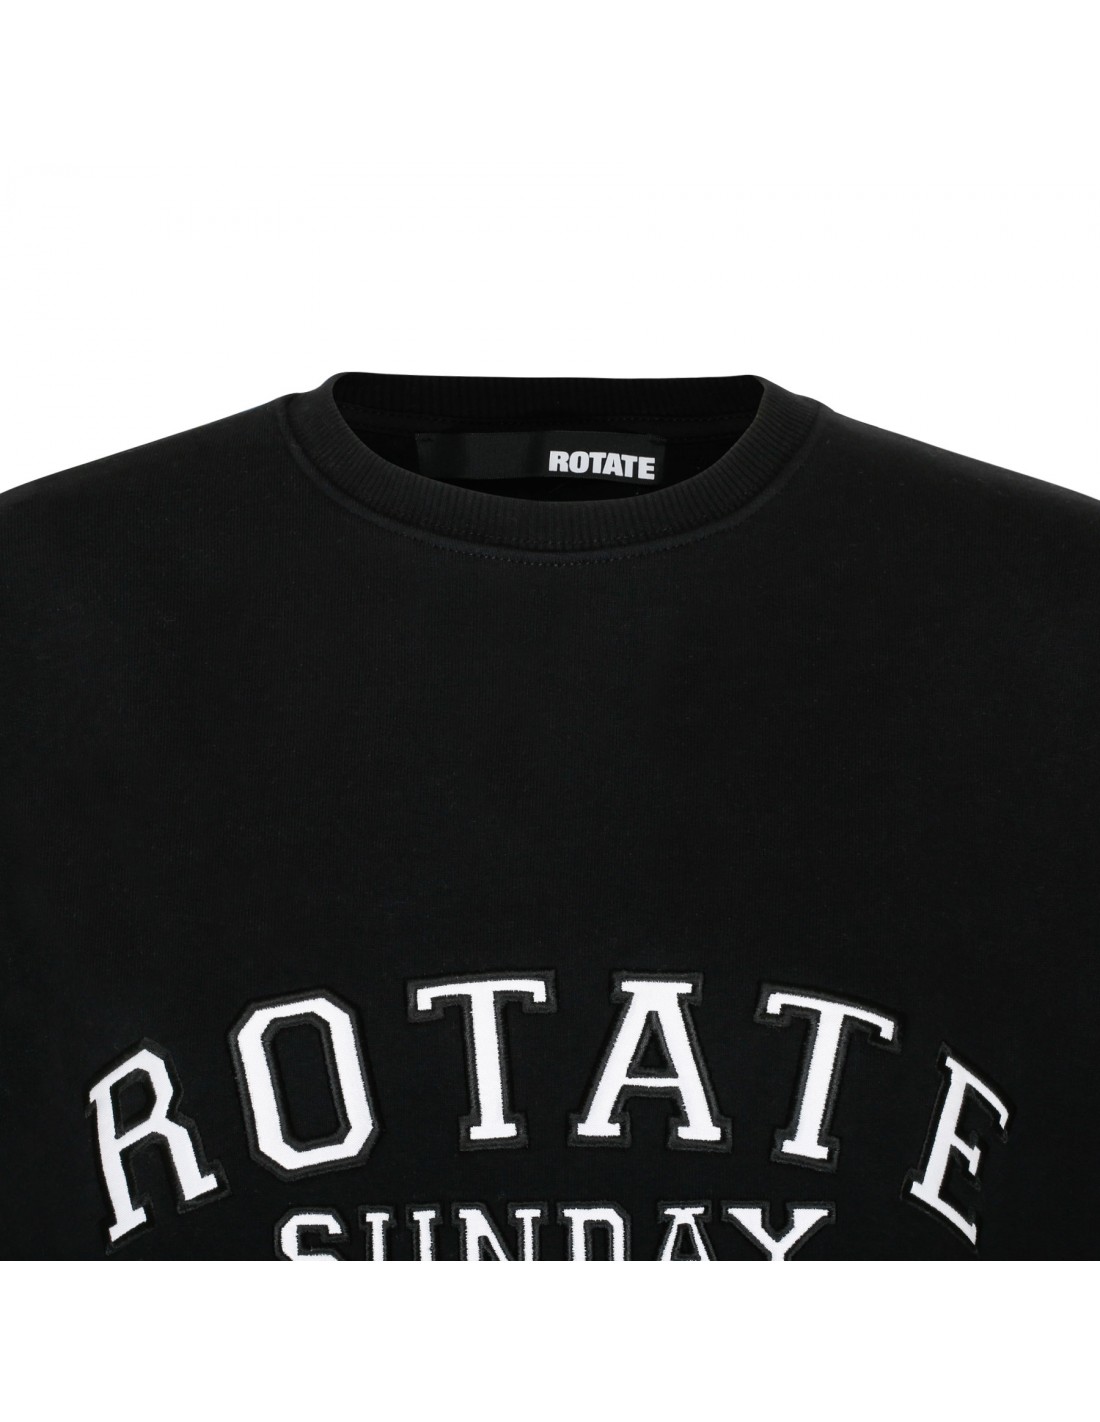 Sunday black sweatshirt